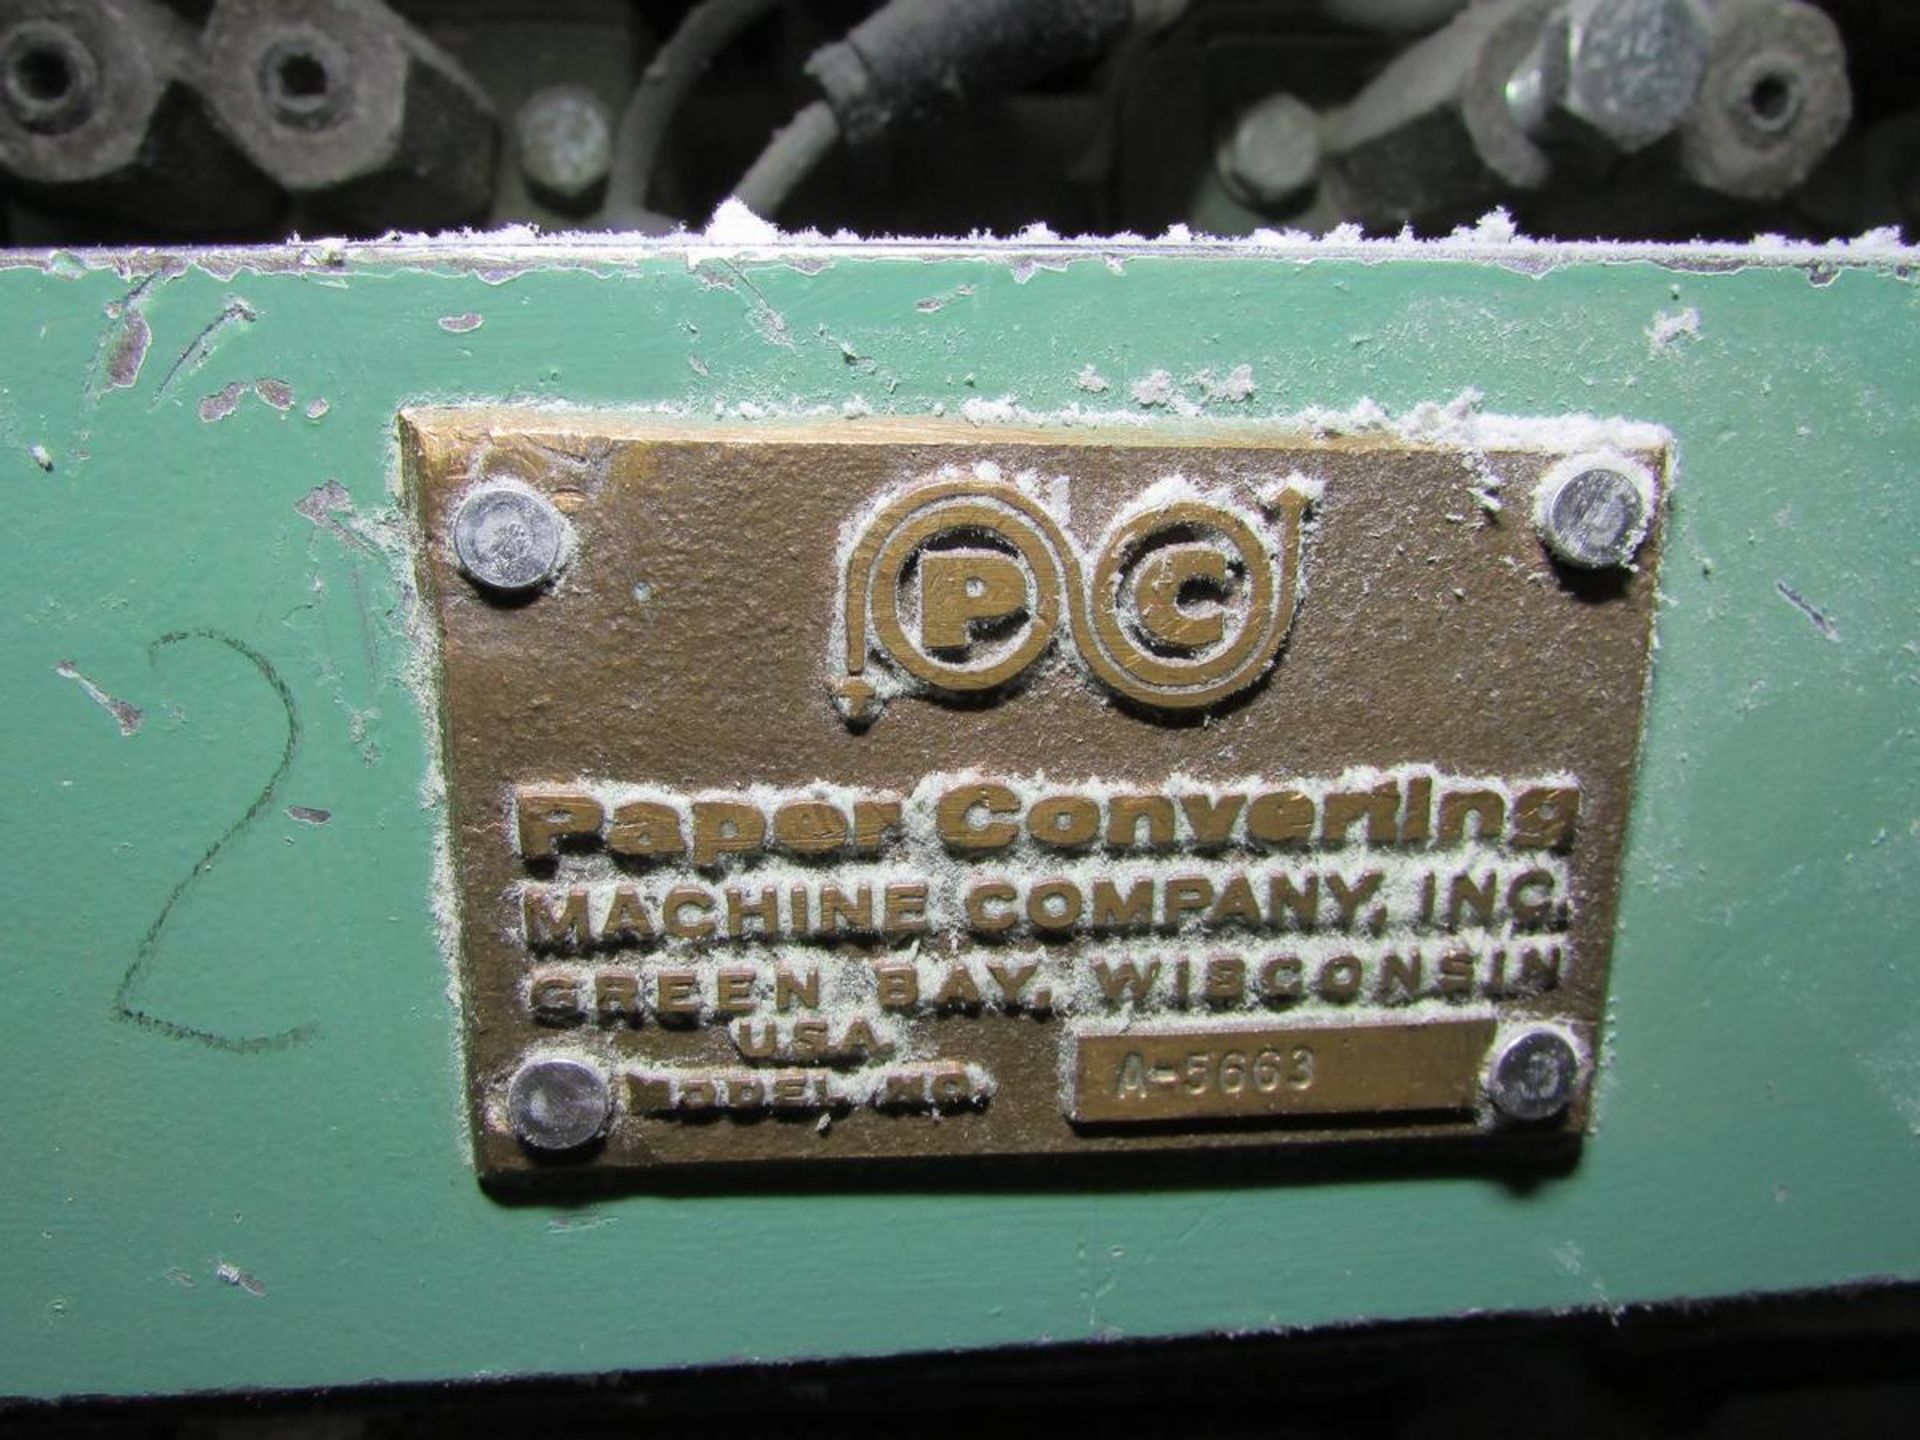 Paper Converting Machine Co. A-5663 3-Lane Cocktail Napkin Folding Machine - Image 19 of 19